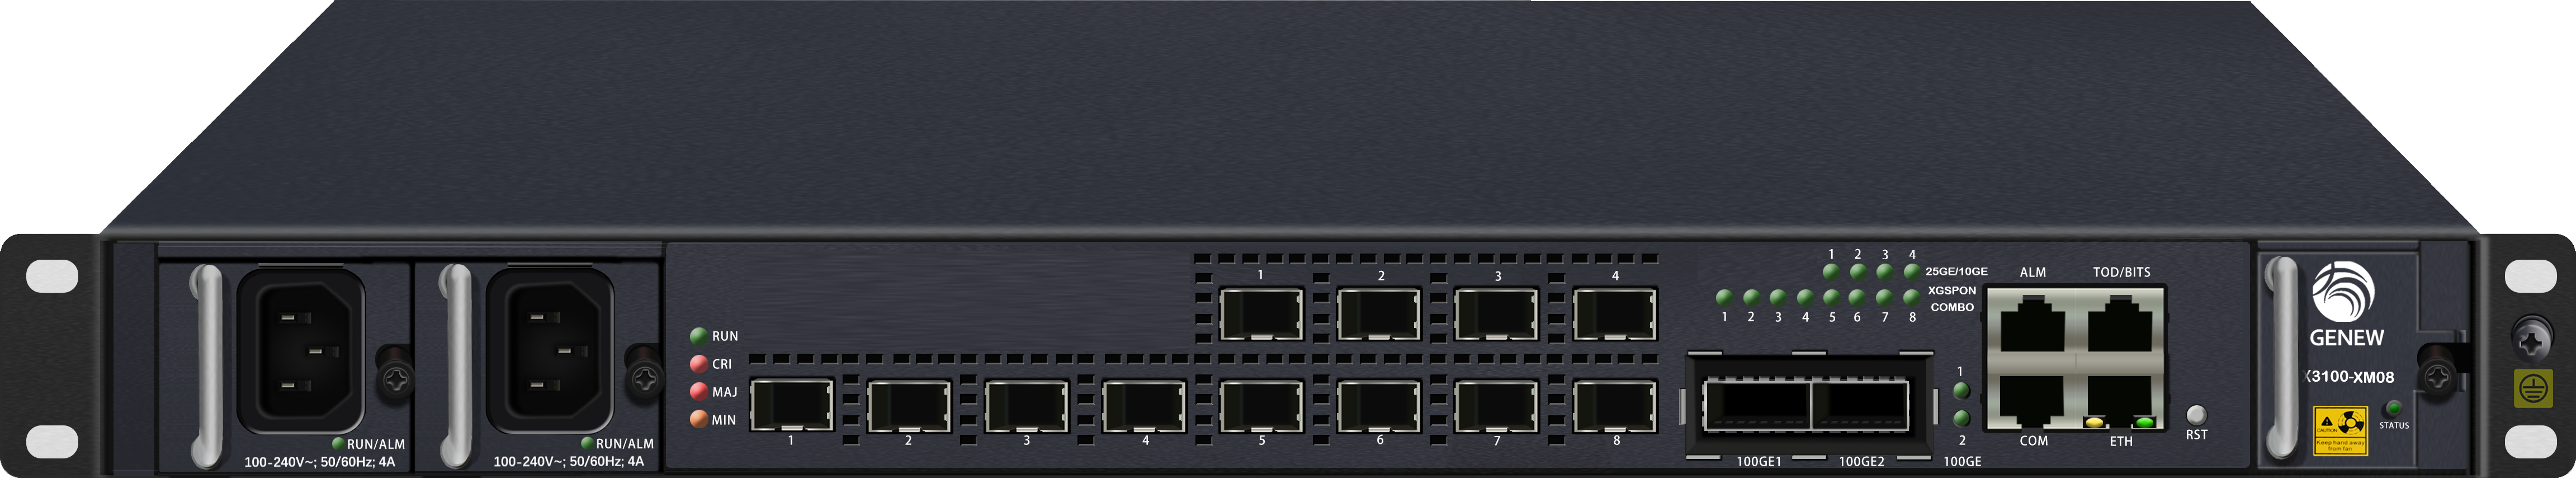 1U 8 puertos XGSPON Combo OLT GX3100-XM08